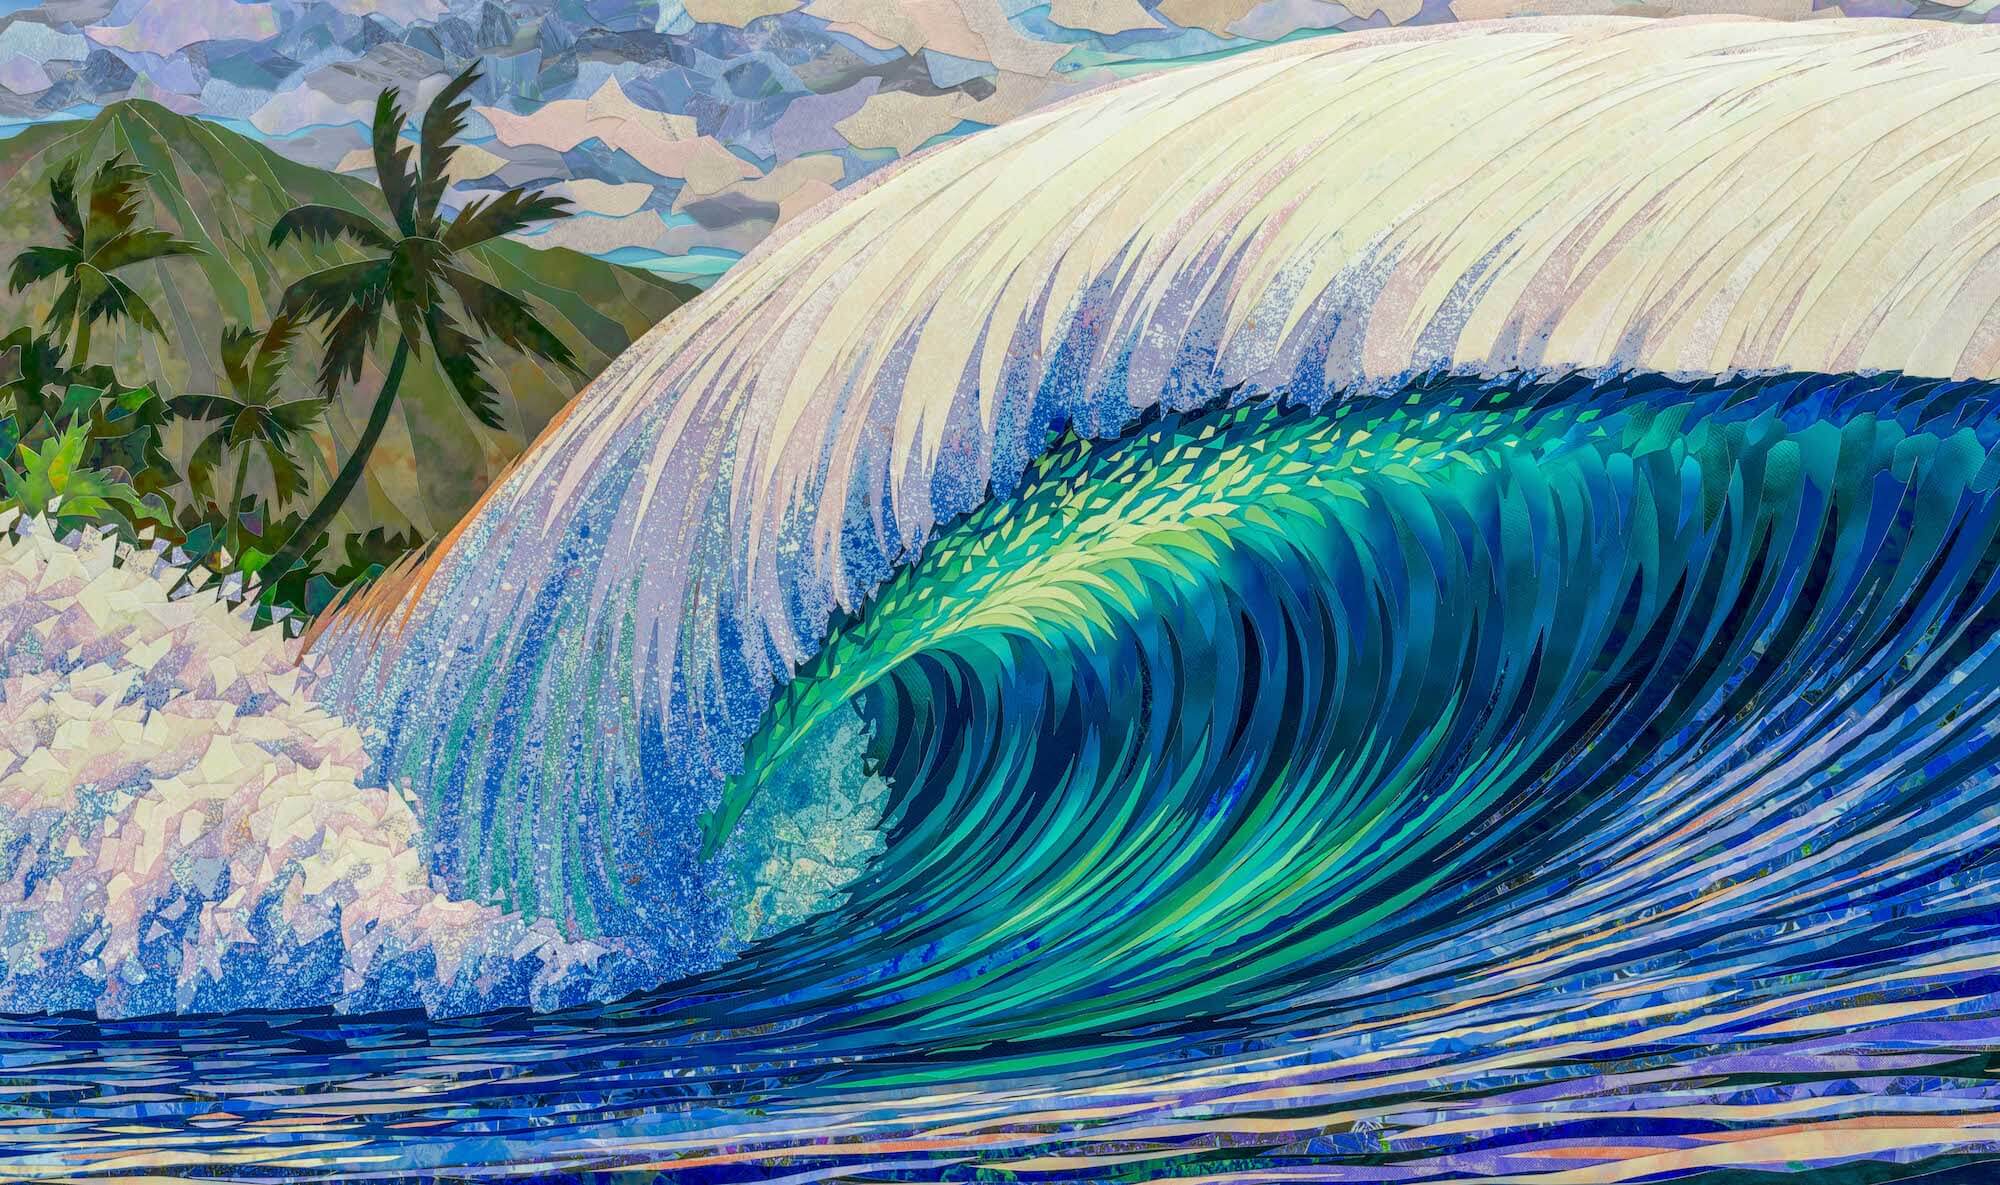 maui wave collage art by hawaii artist patrick parker